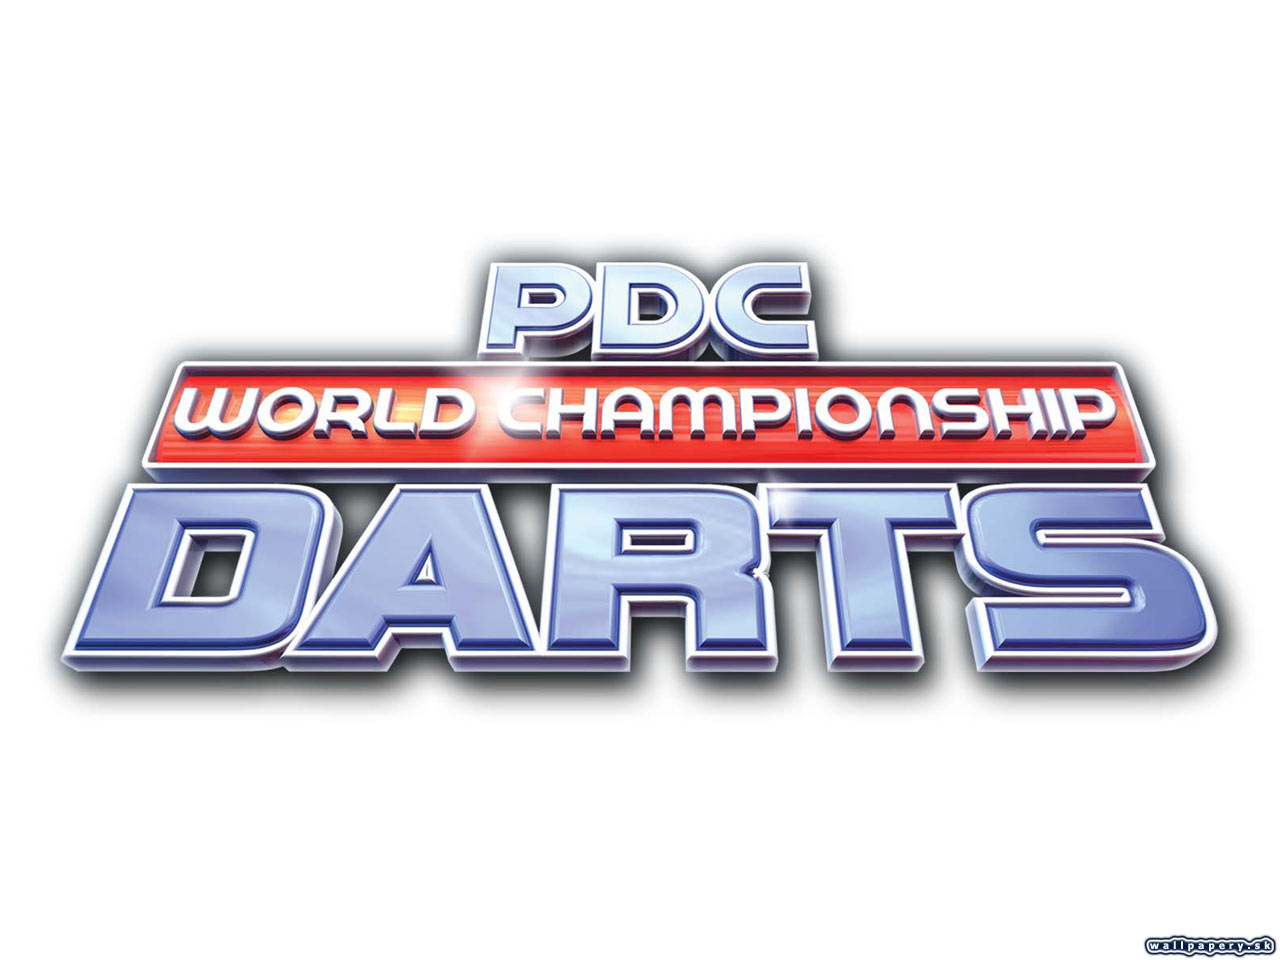 PDC World Championship Darts - wallpaper 3